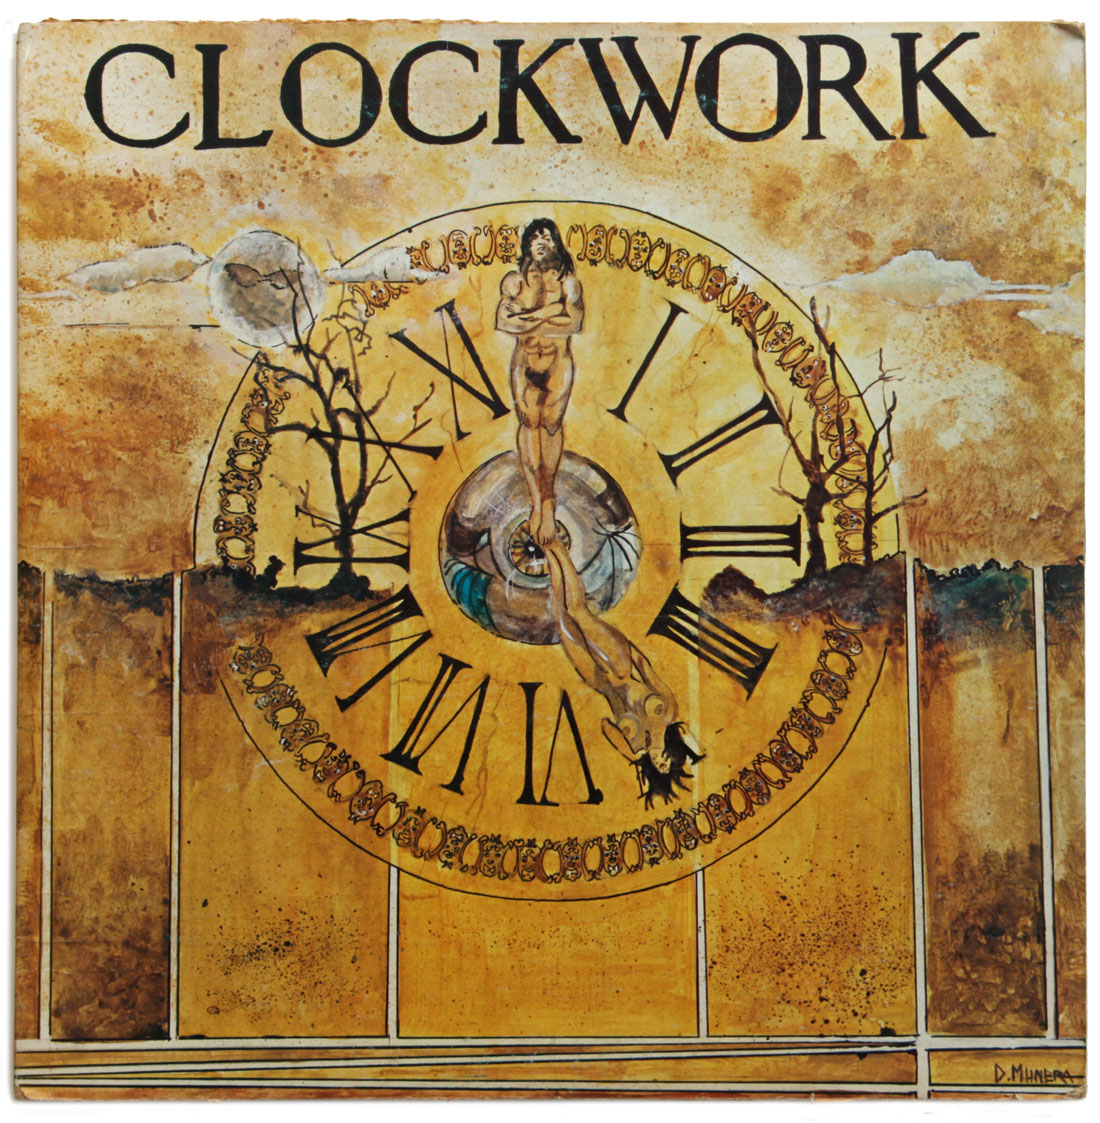 In 1975, Clockwork recorded its first album at M&M Studios in Hialeah, Florida.